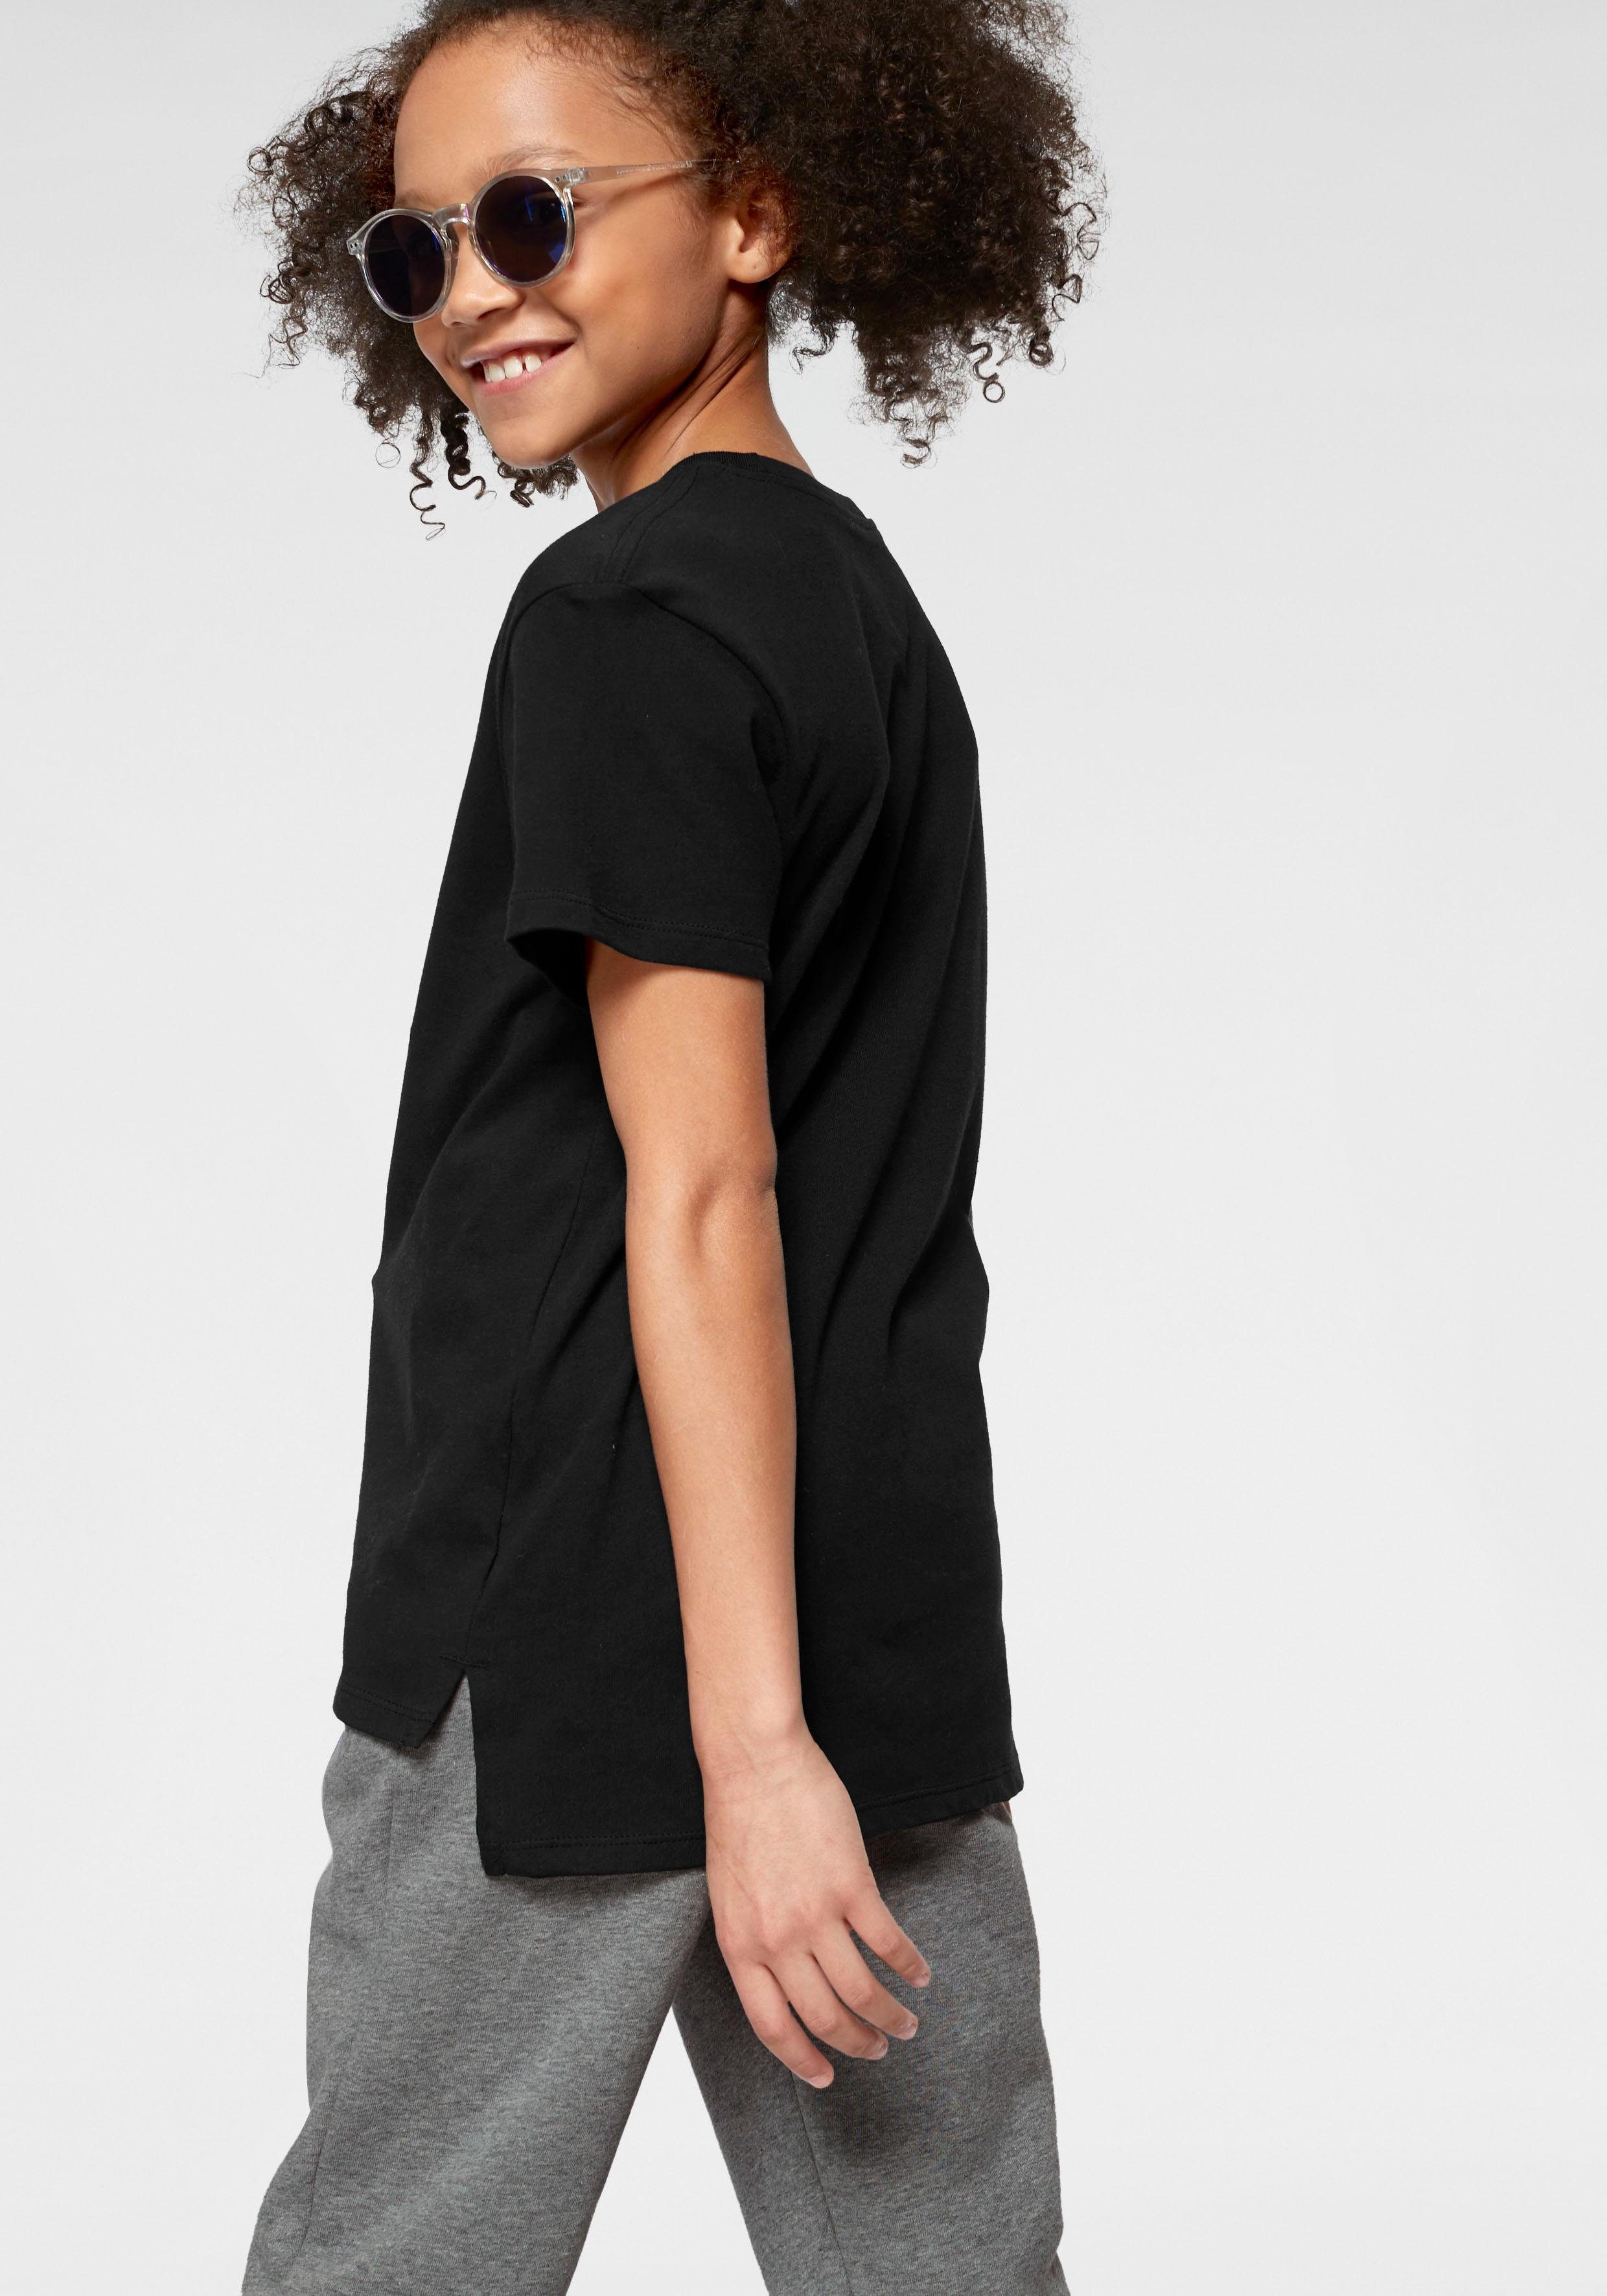 Sportswear T-Shirt Kids' Nike T-Shirt Big schwarz